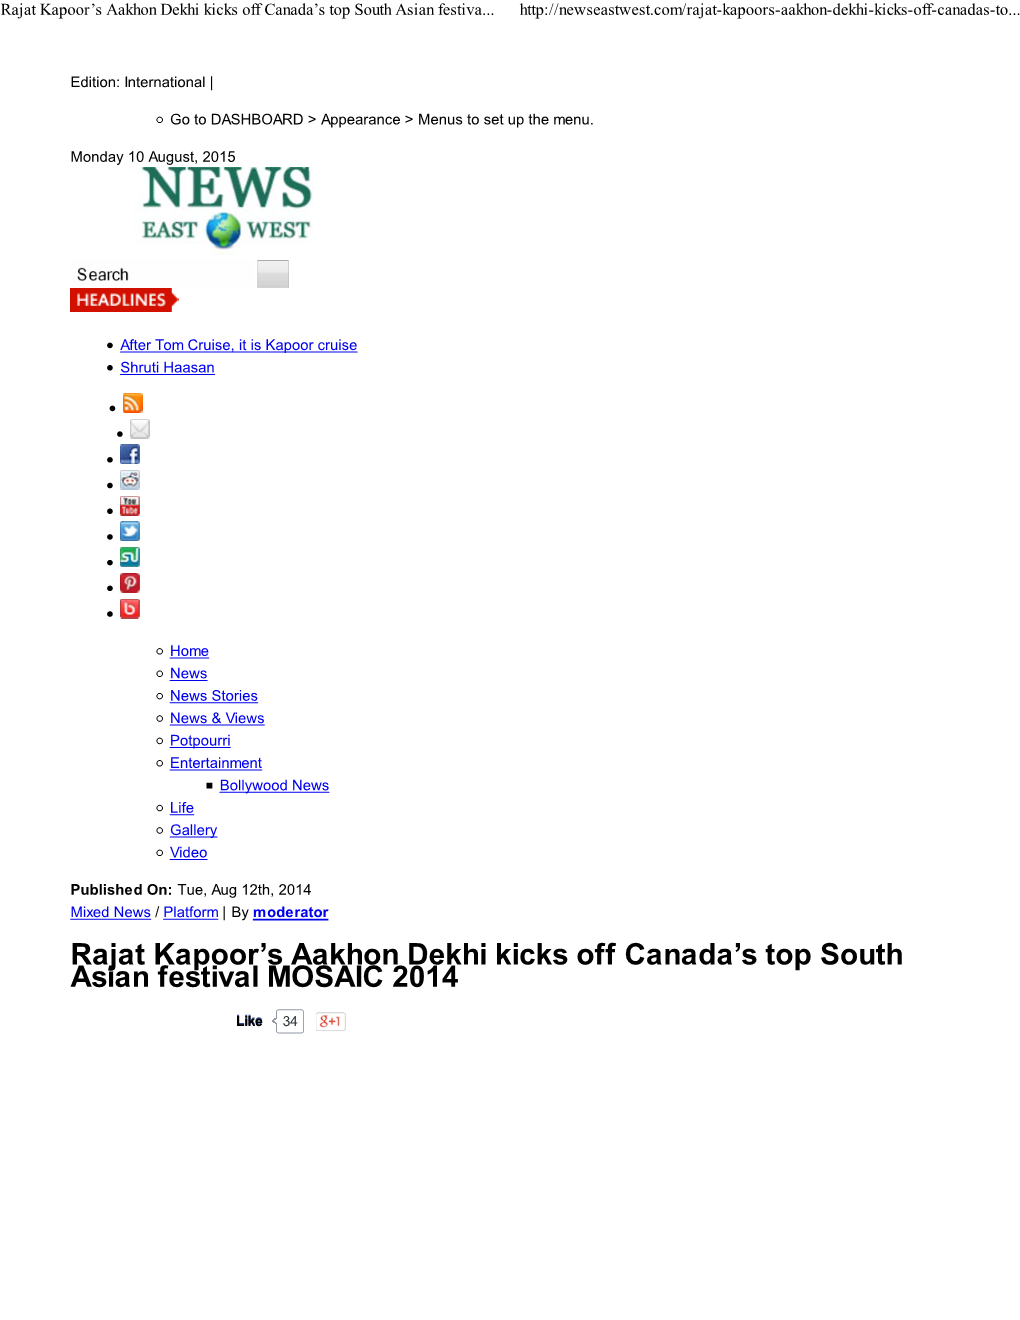 Rajat Kapoor's Aakhon Dekhi Kicks Off Canada's Top